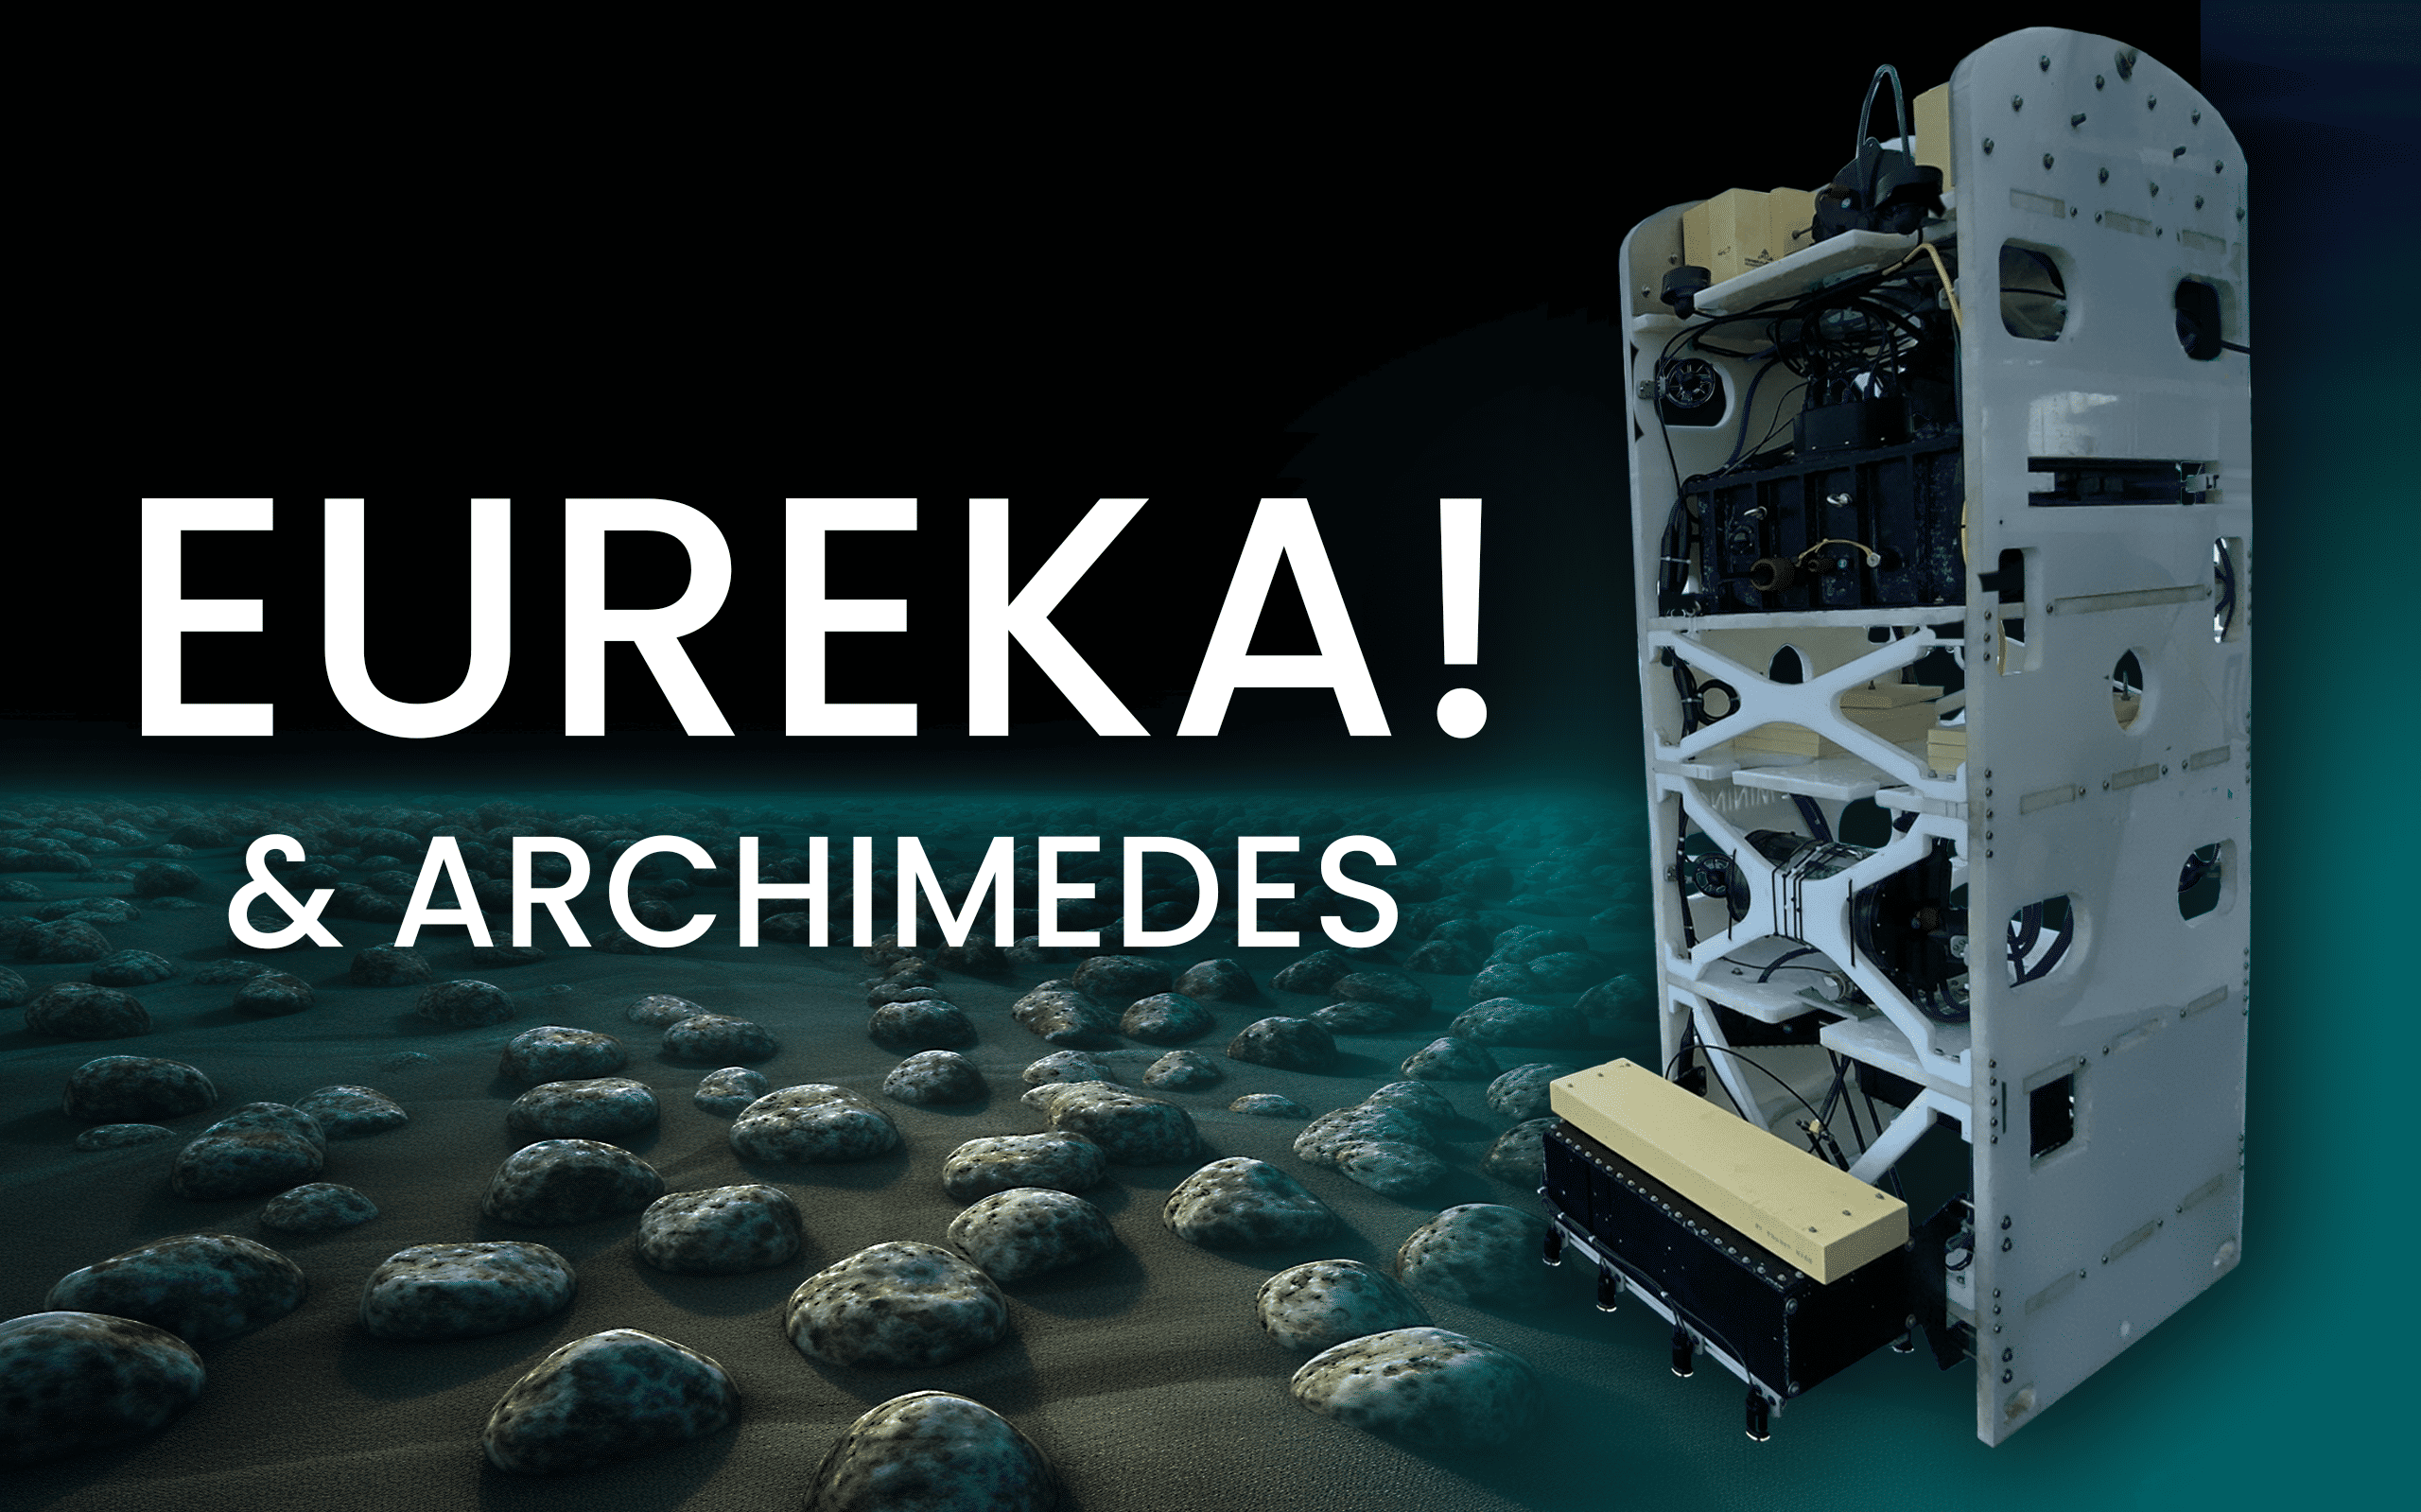 Deep sea polymetallic nodules and Impossible Metals' Eureka 1 UAV